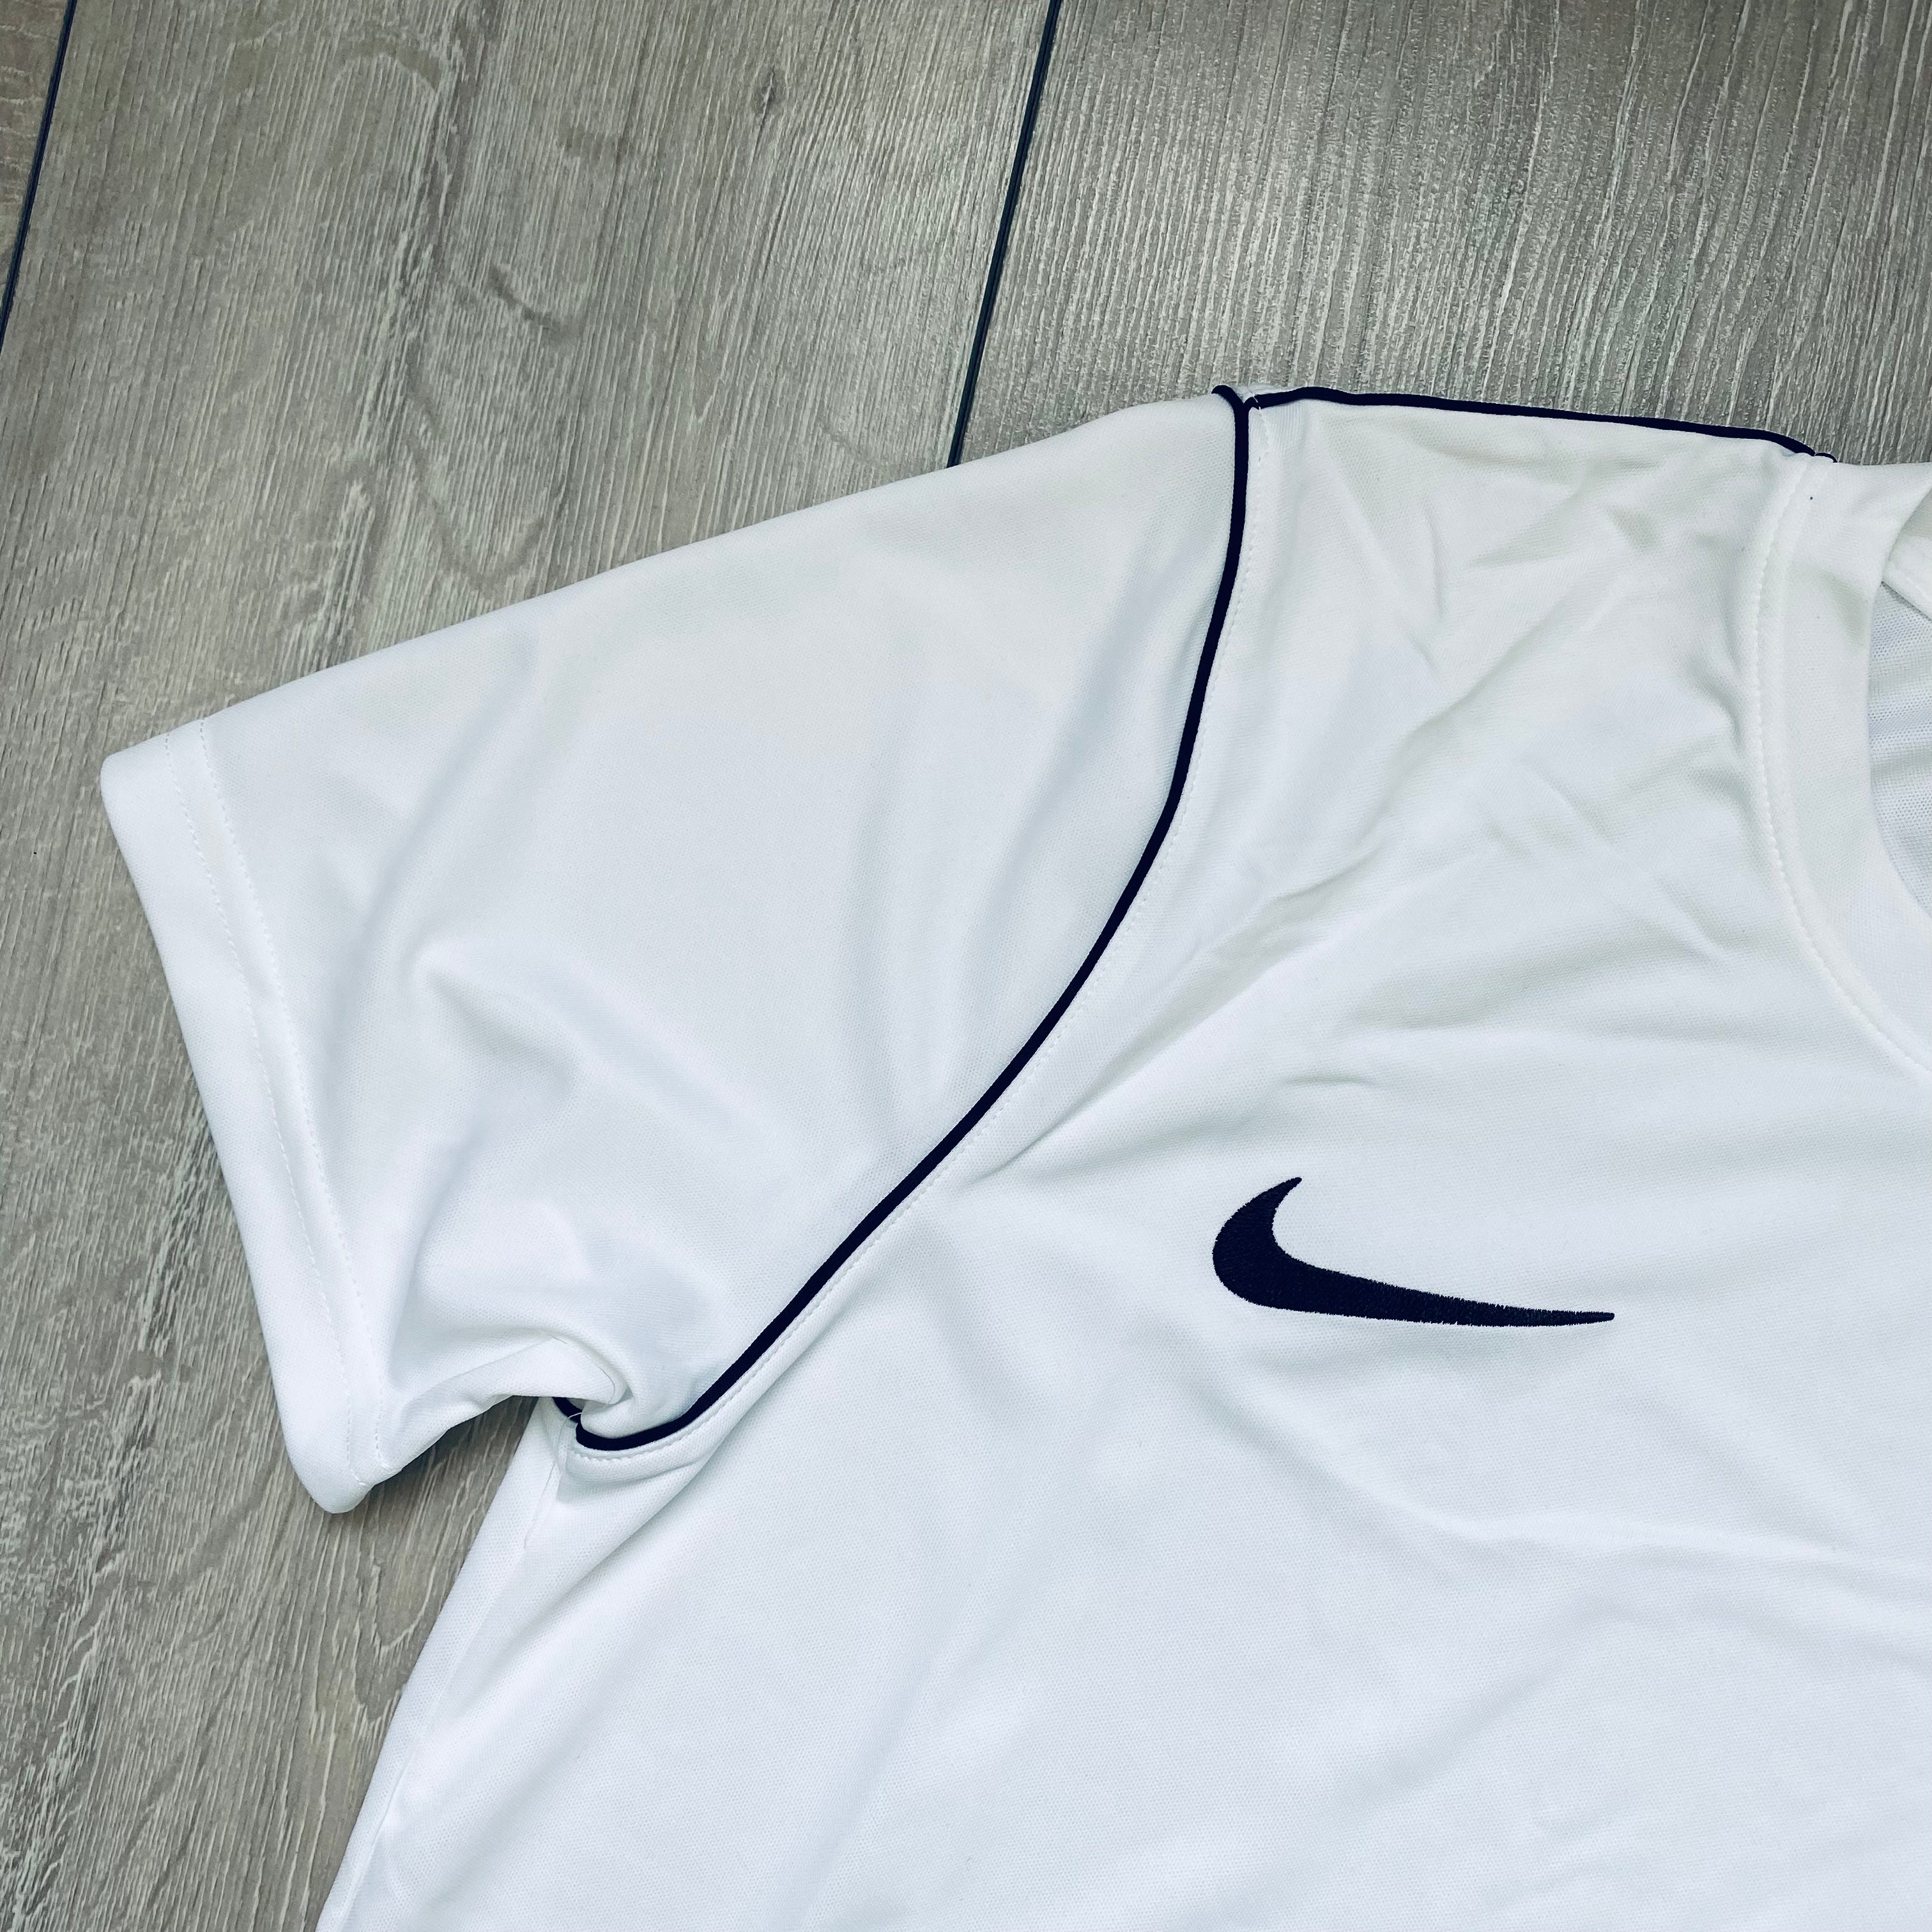 Nike Dri-Fit T-Shirt - White